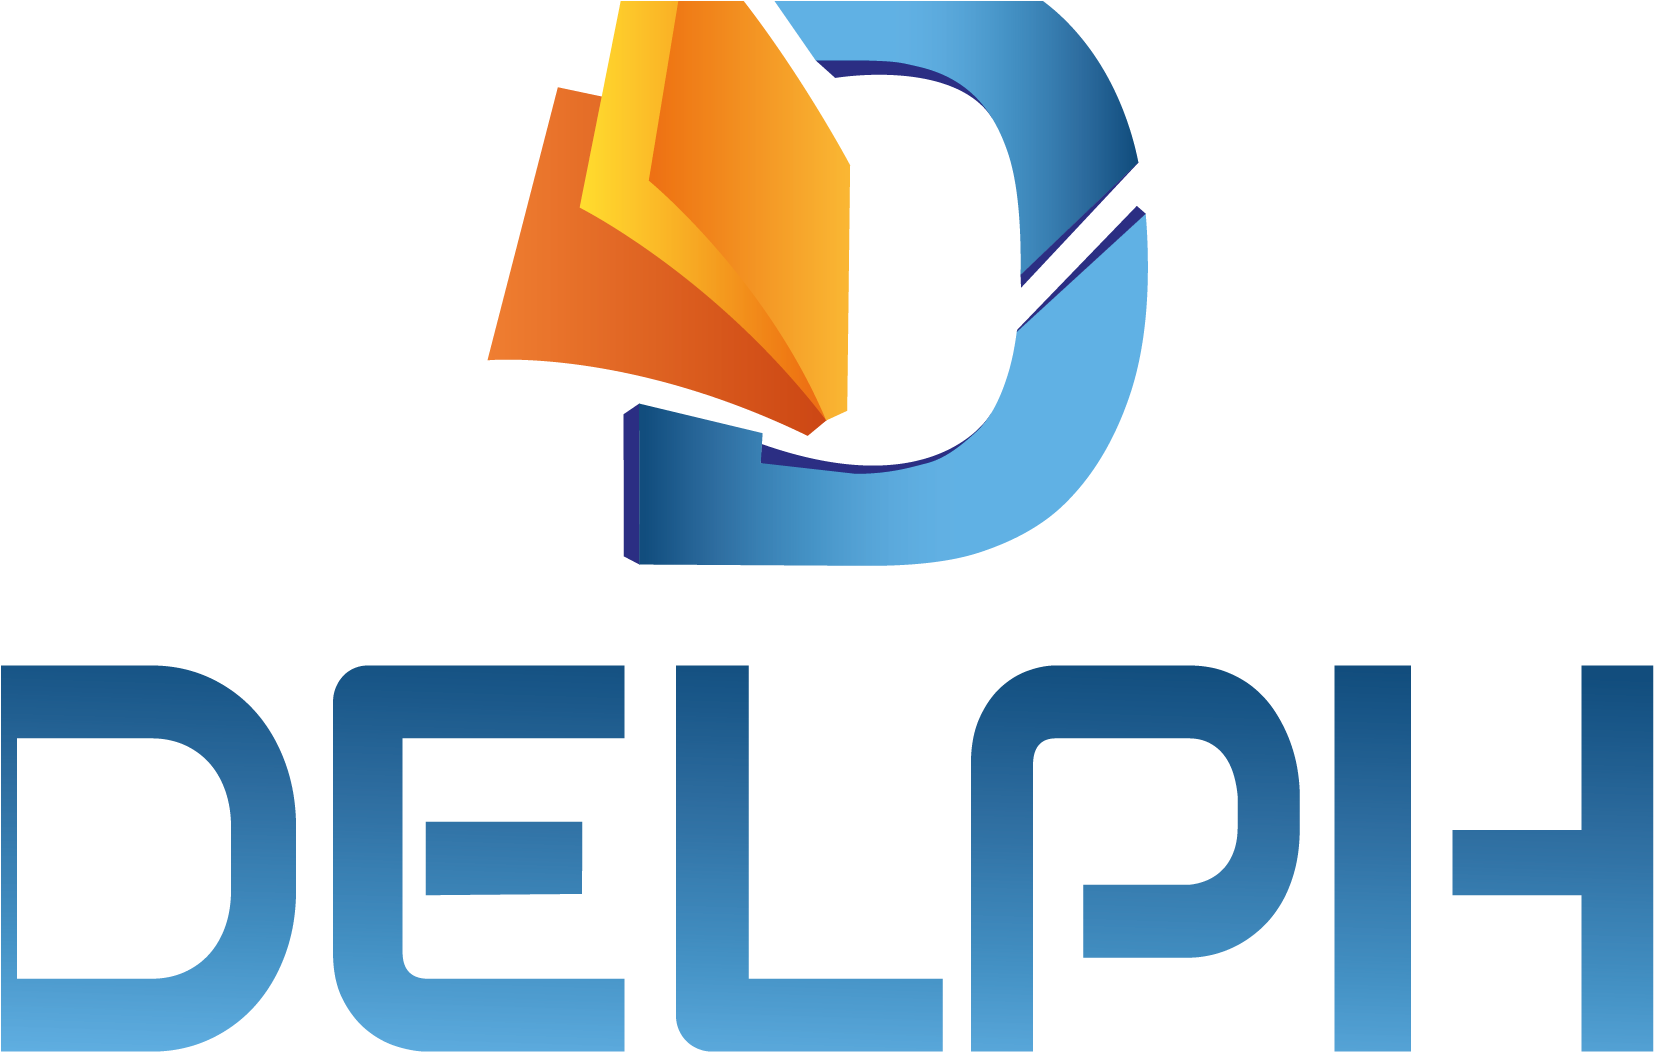 Delphi Star - Delphi Star Training Center Clipart (1666x1073), Png Download